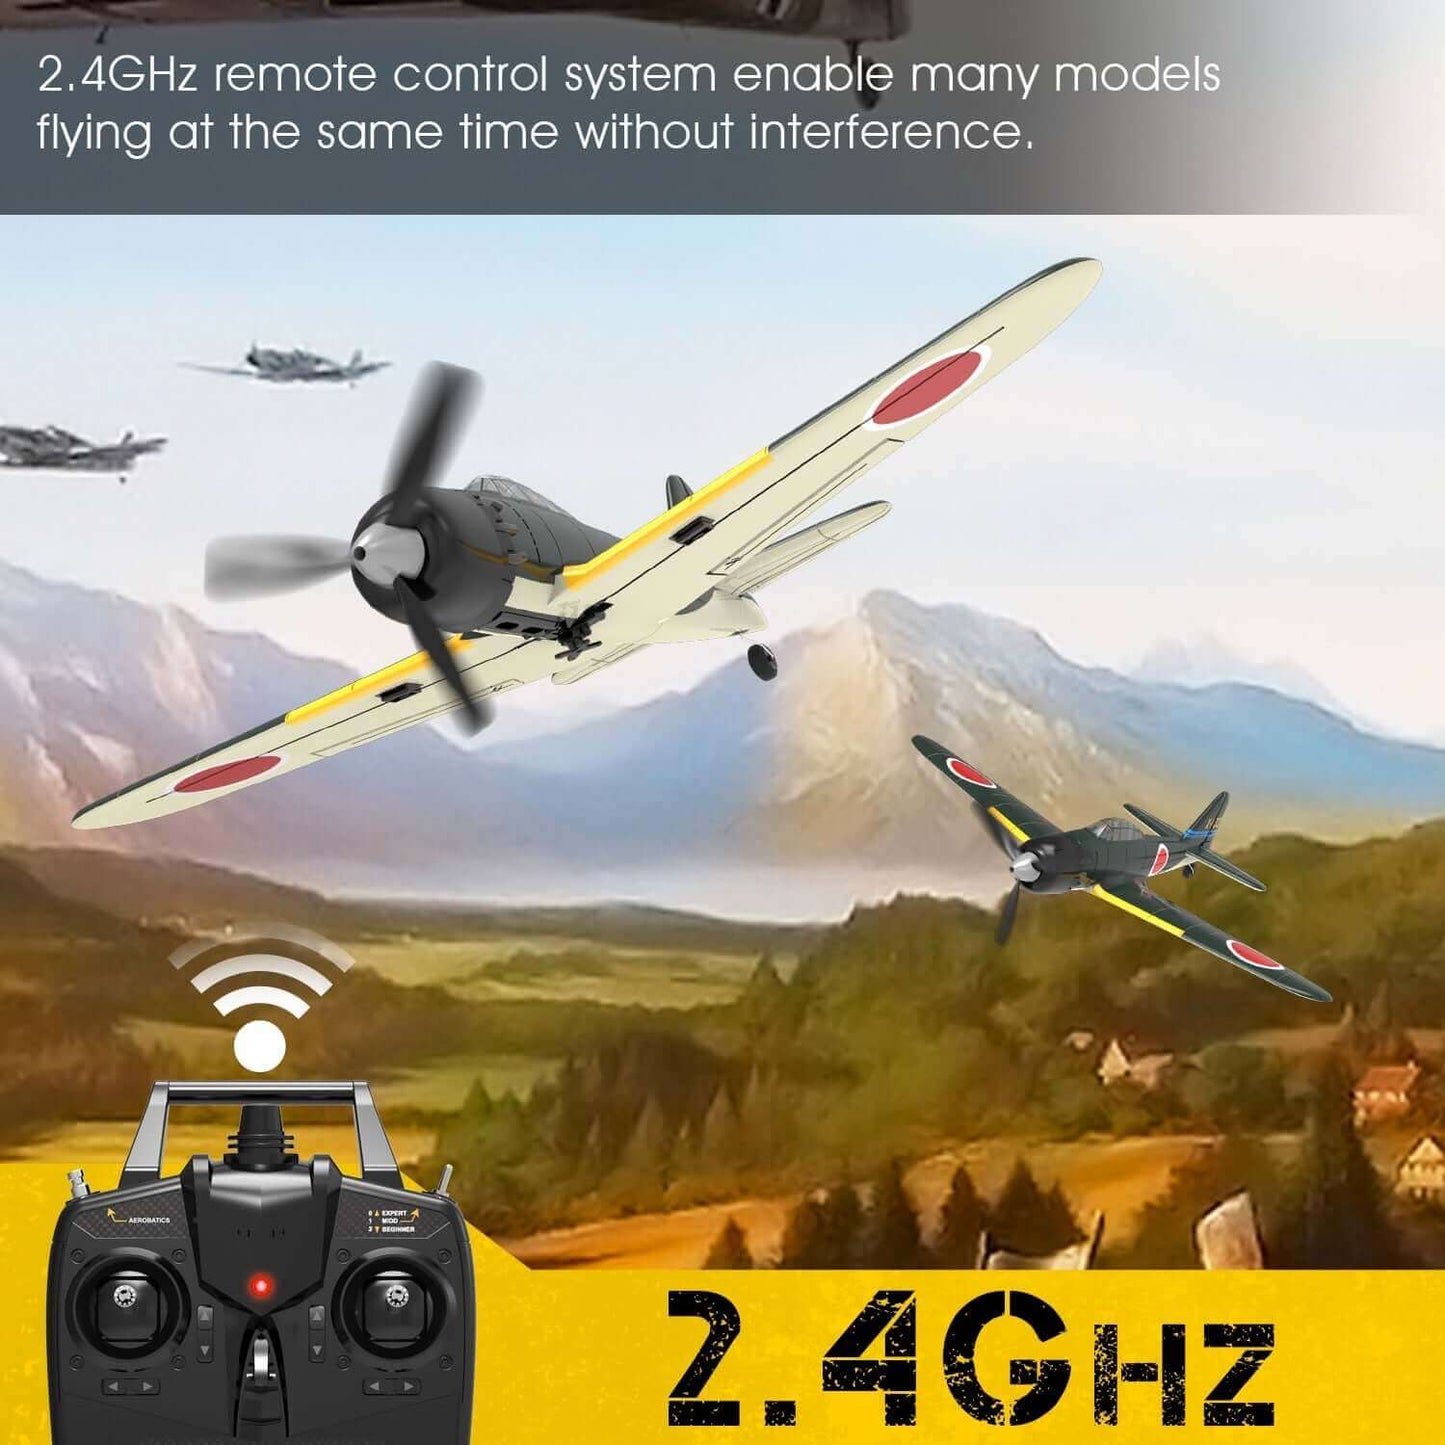 Zero RC Plane 2.4G 4CH Remote Control Airplane - Kids toy lover